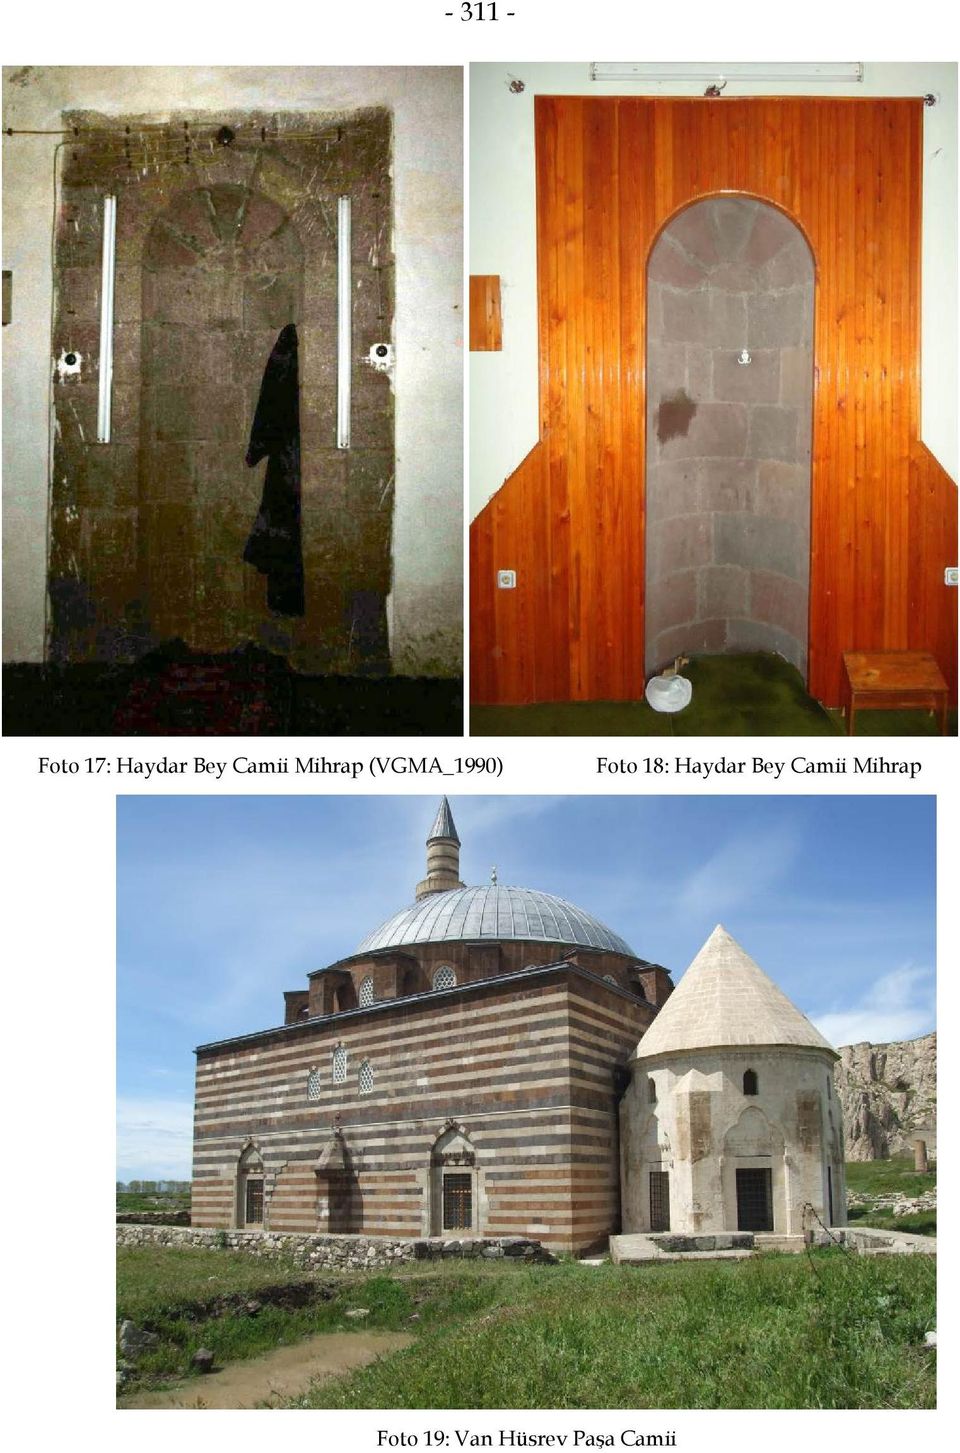 Foto 18: Haydar Bey Camii